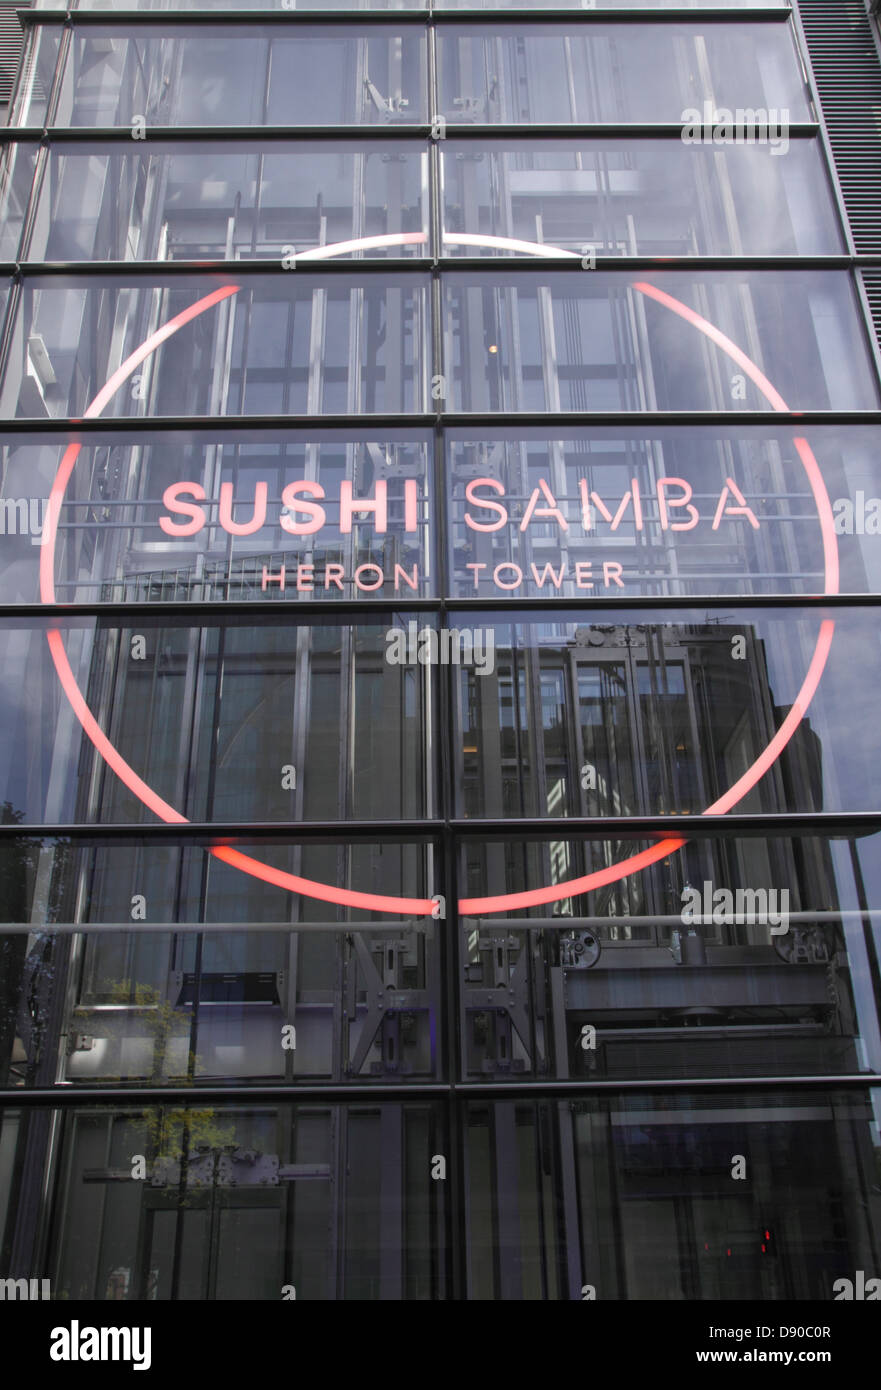 Sushi Samba restaurant at Heron Tower London Stock Photo - Alamy